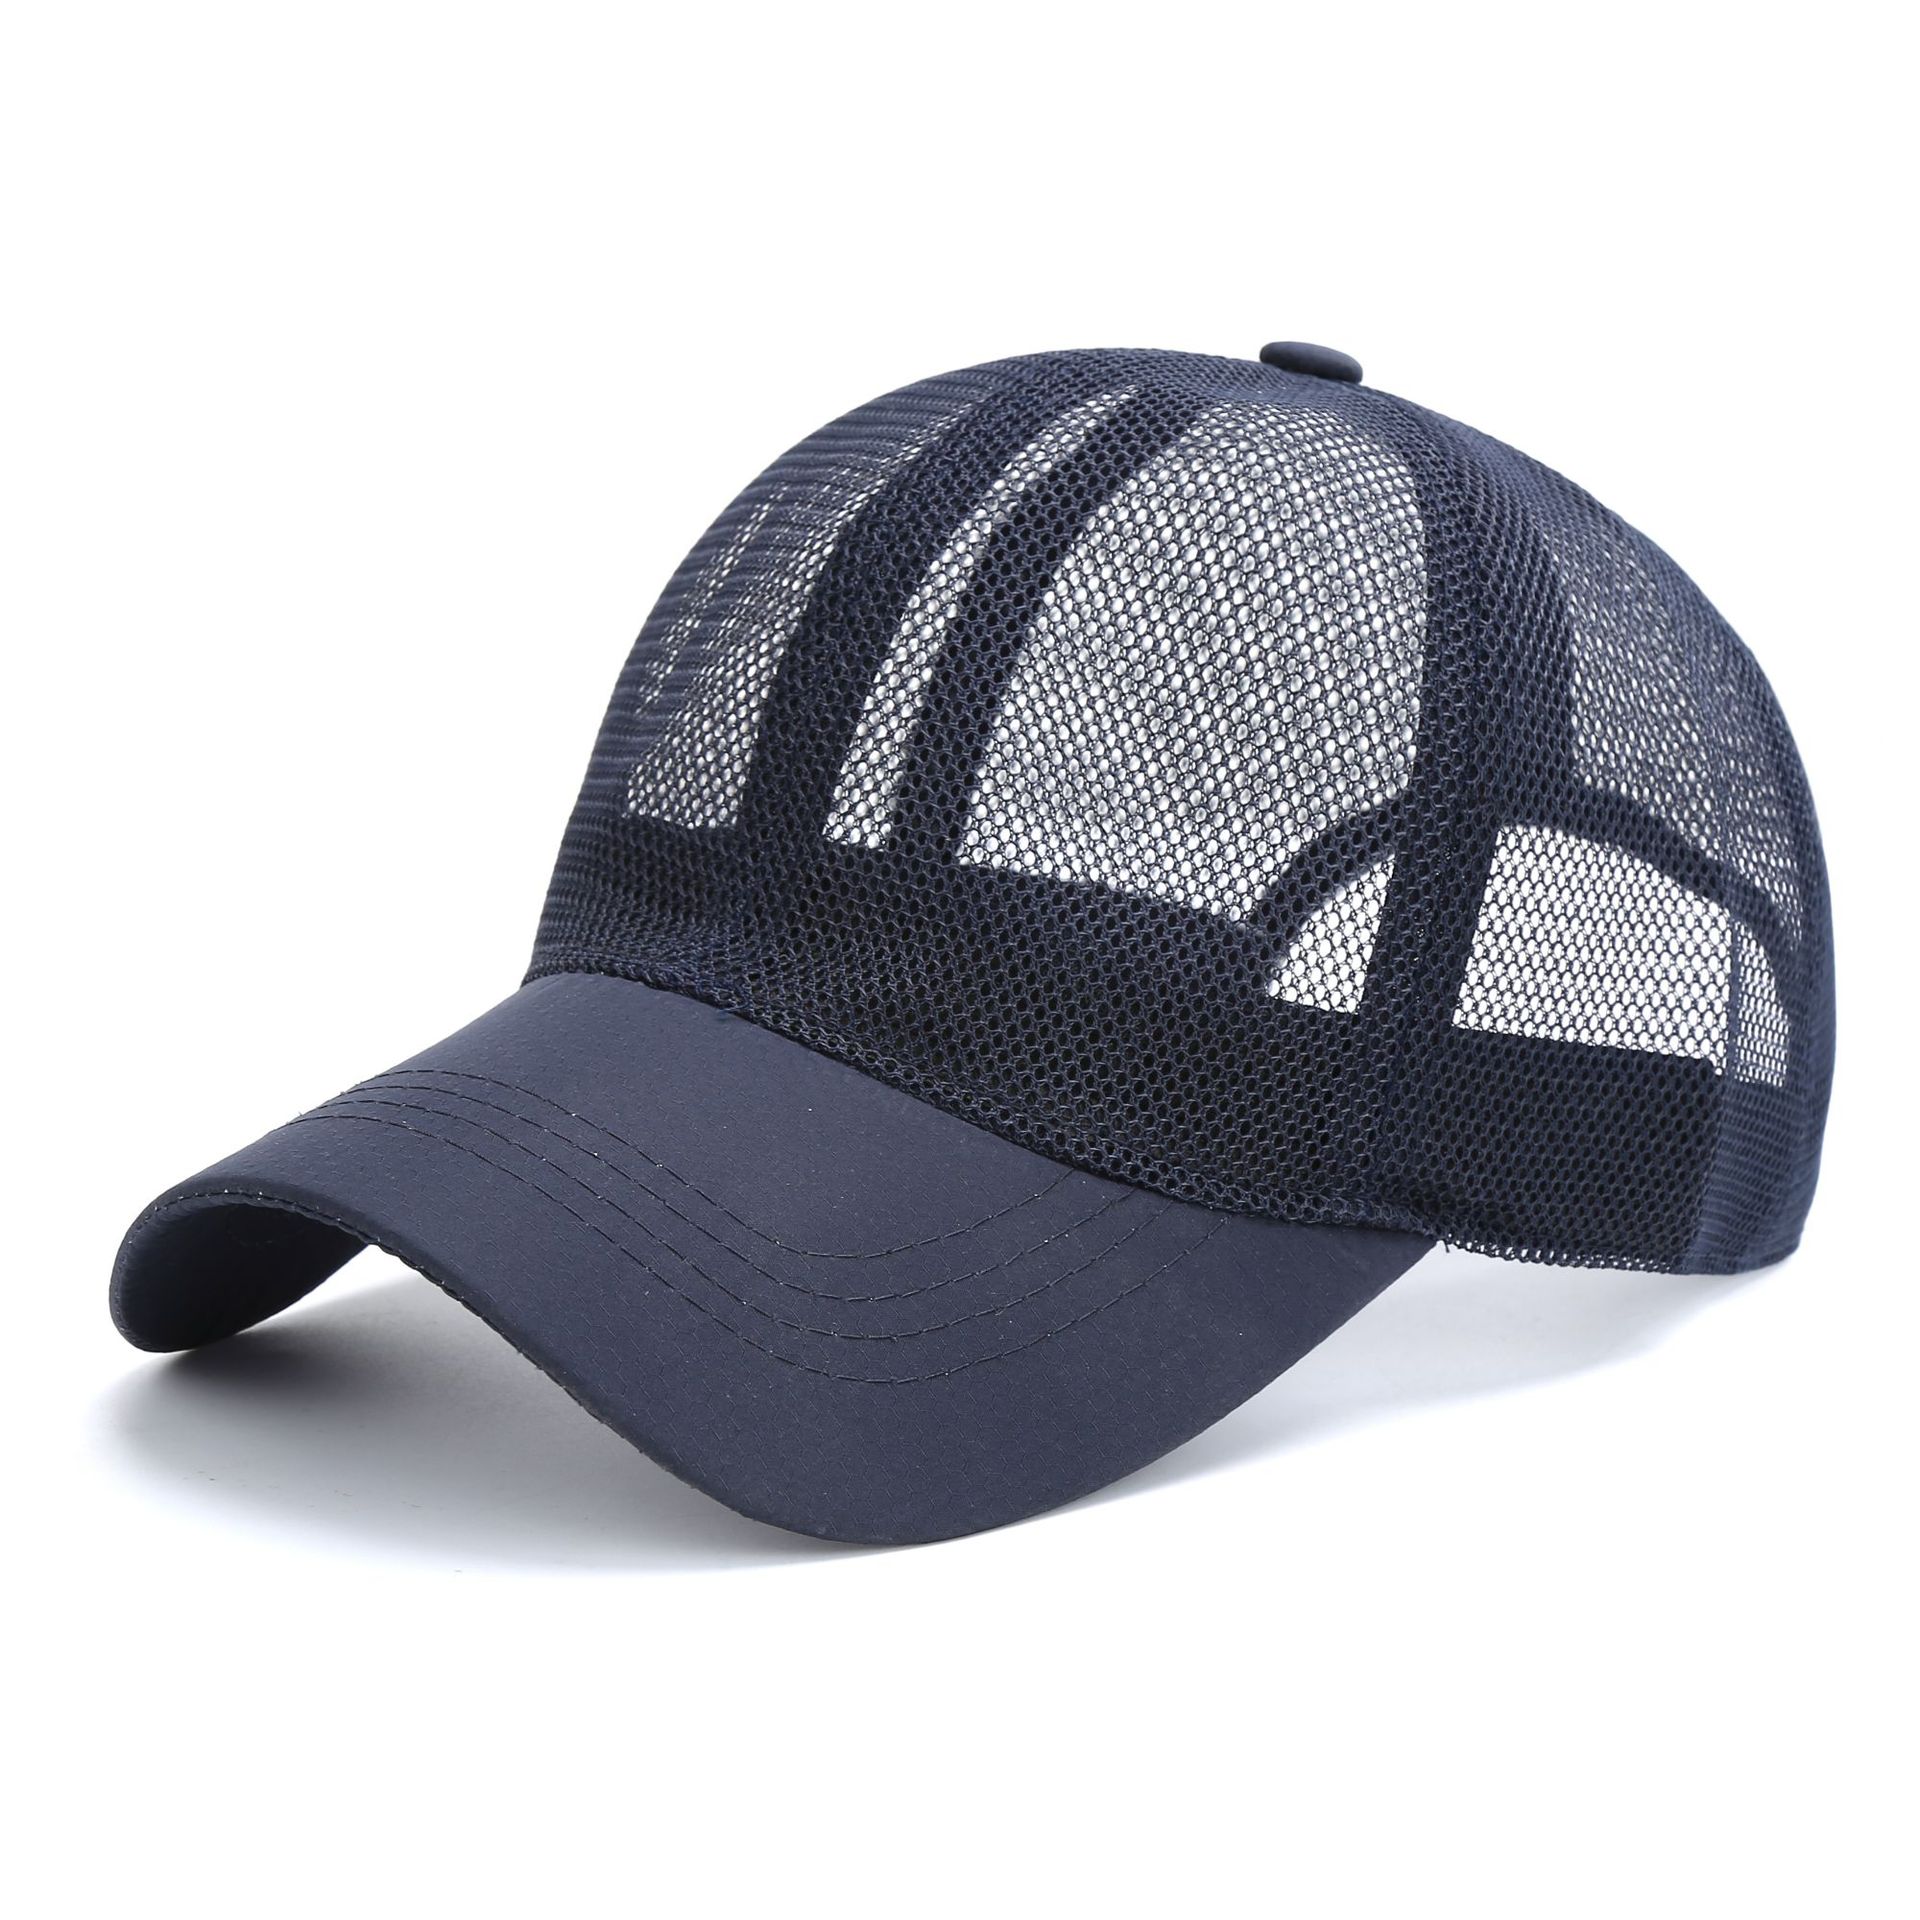 Hat Men's Summer Thin Sunshade Mesh Sun Hat Outdoor Sports Sun Protection Breathable Fishing Baseball Peaked Cap Women